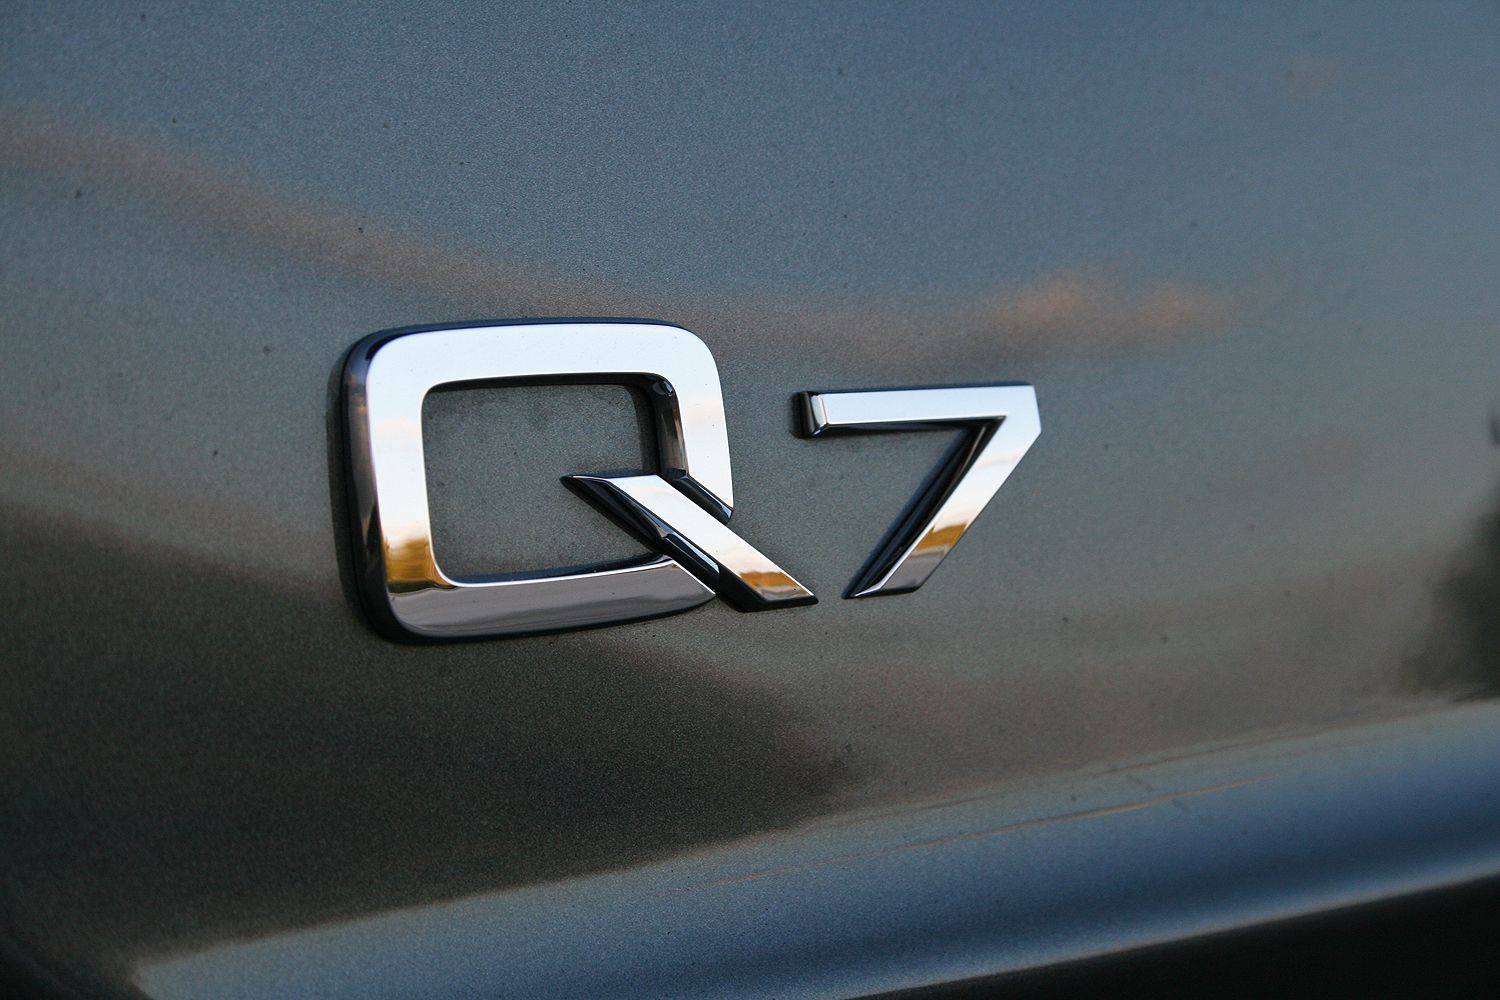 2015 Audi Q7 - Driven